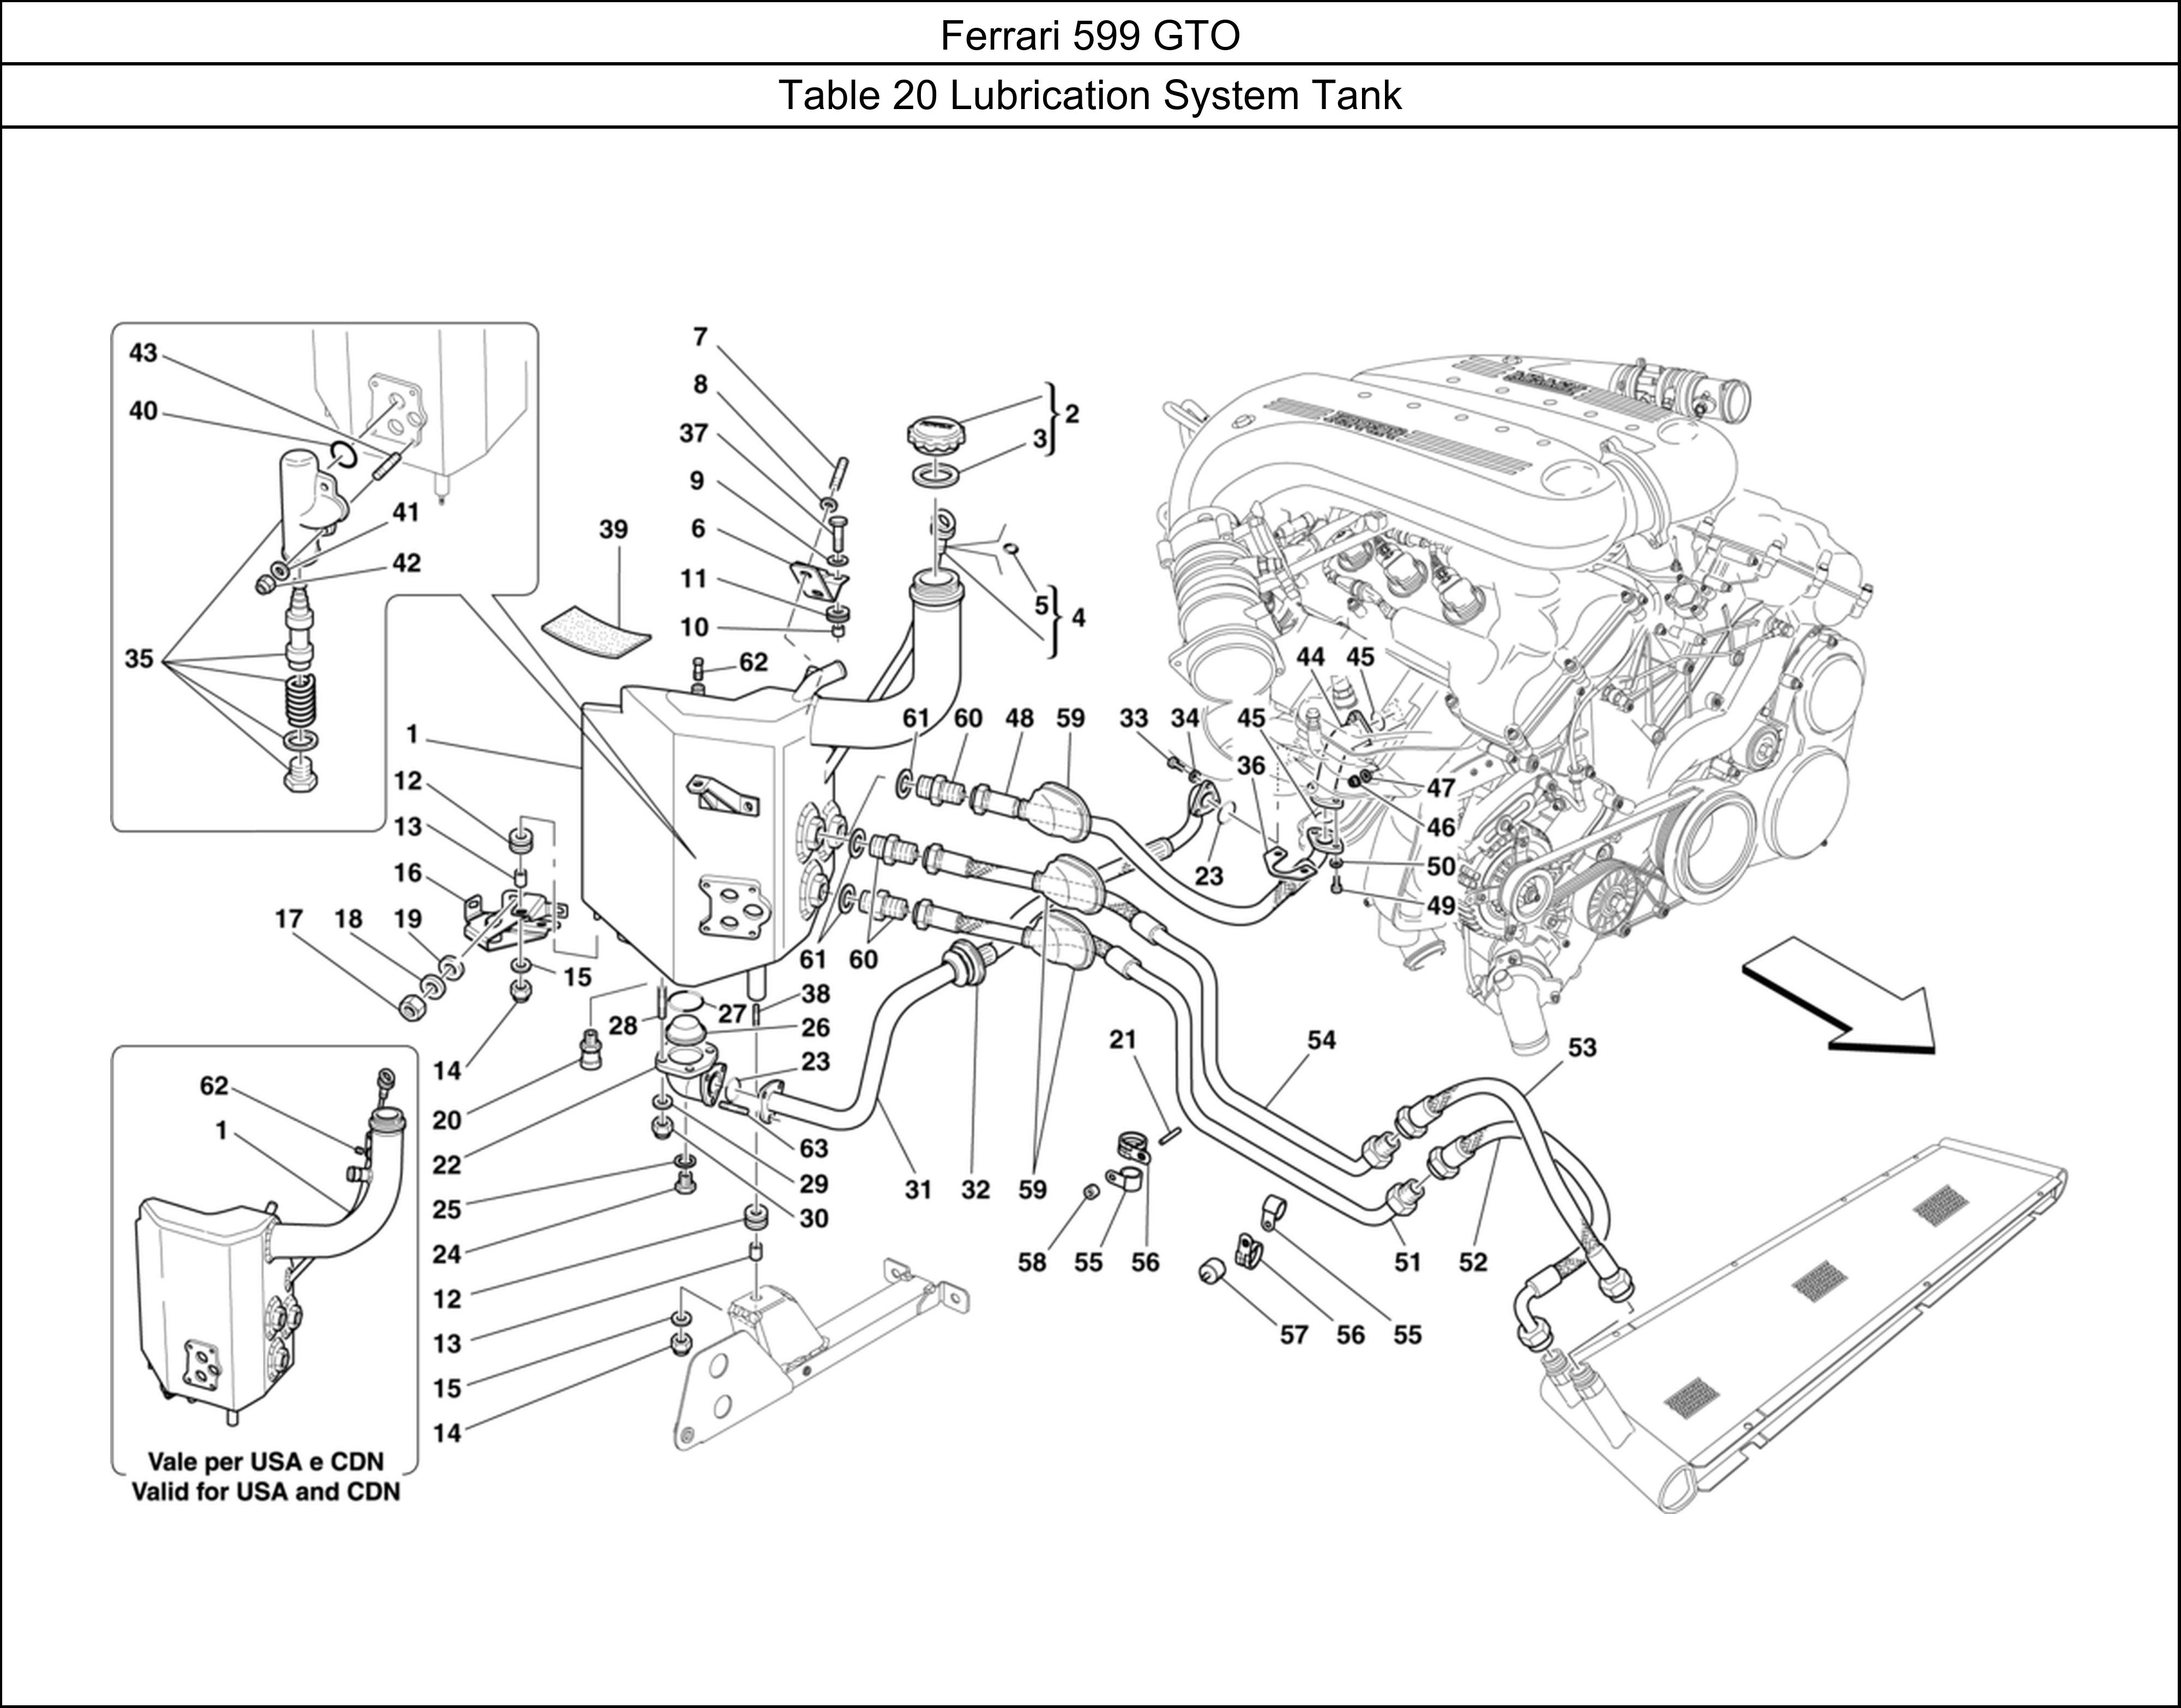 Ferrari Parts Ferrari 599 GTO Table 20 Lubrication System Tank